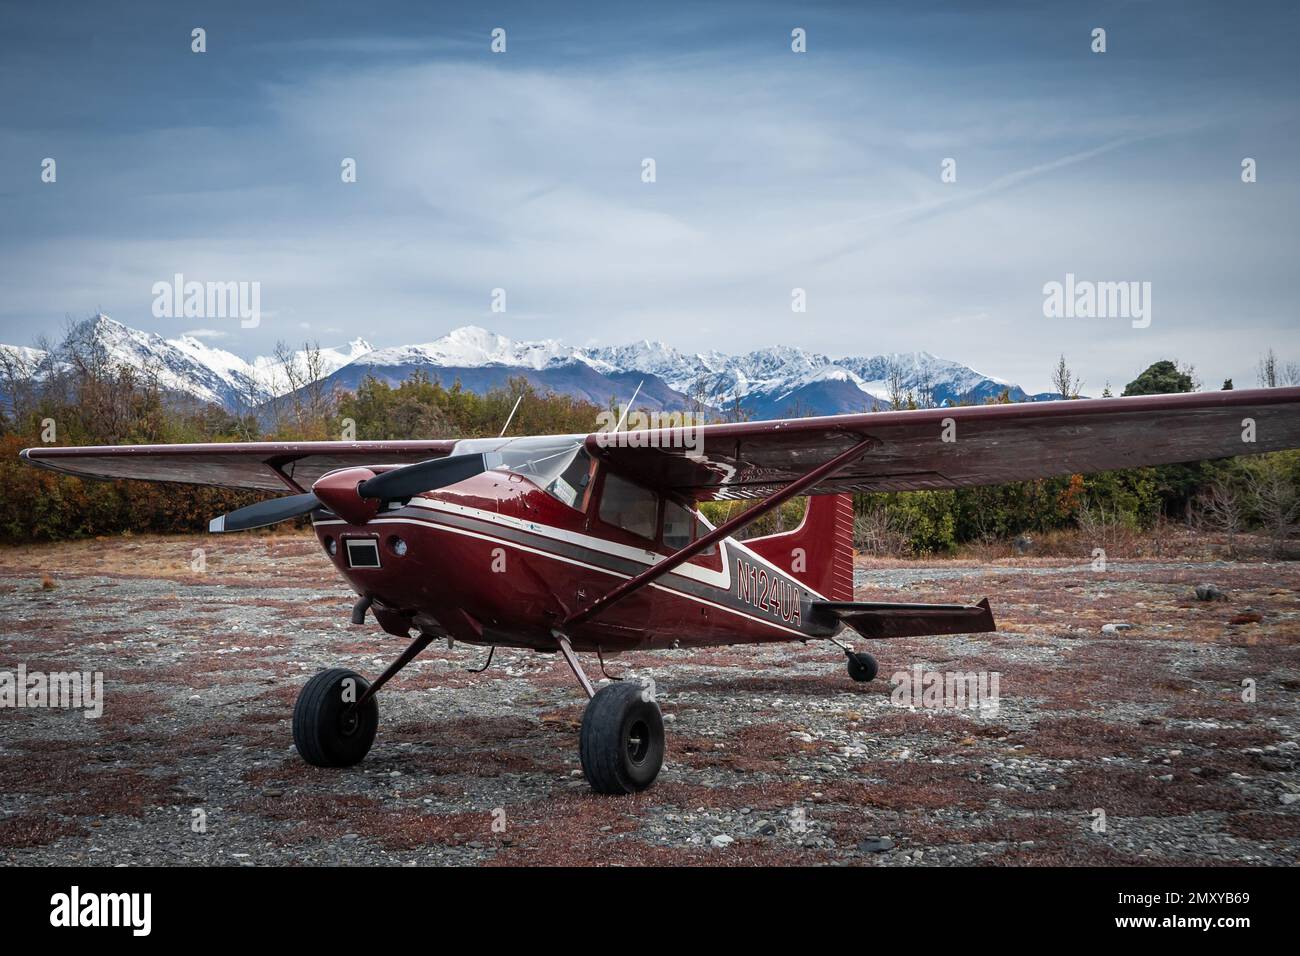 A Cessna Skywagon aircraft sitting on a dirt field near a glacier in Alaska Stock Photo